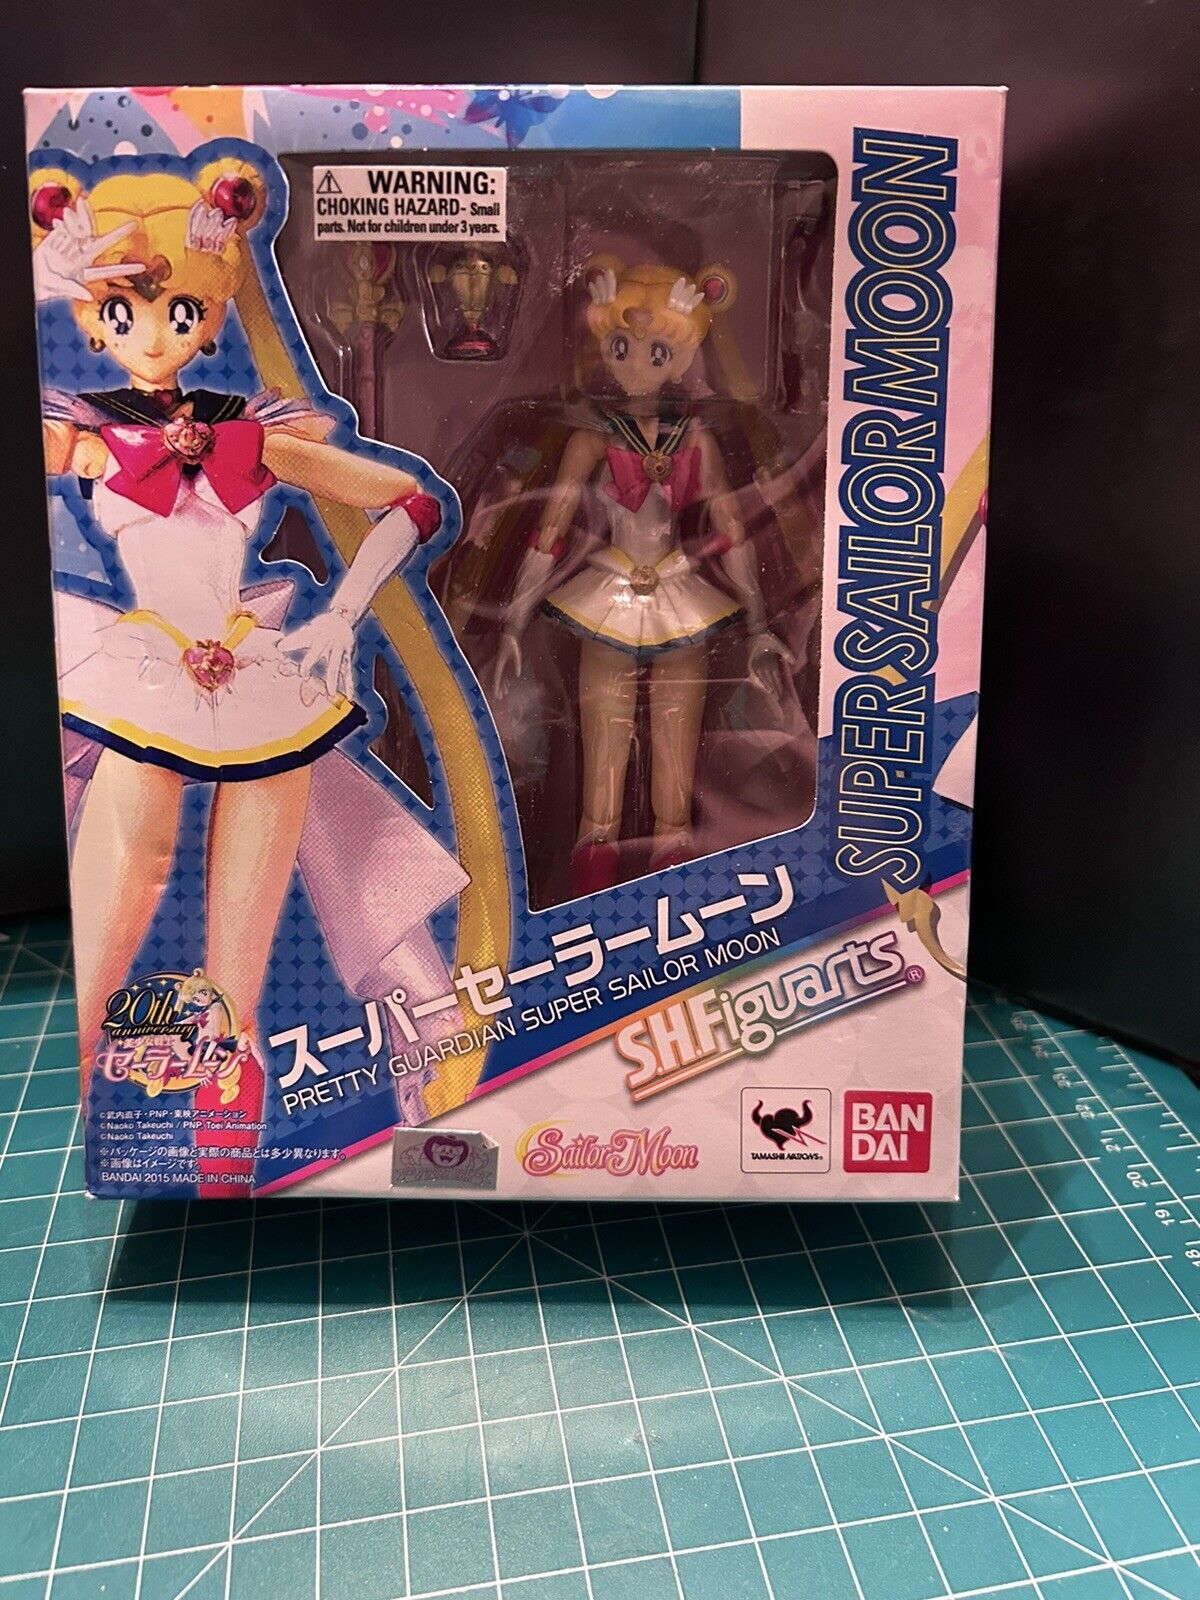 S.H.Figuarts Pretty Guardian Super Sailor Moon Action Figure  Version Bandai New